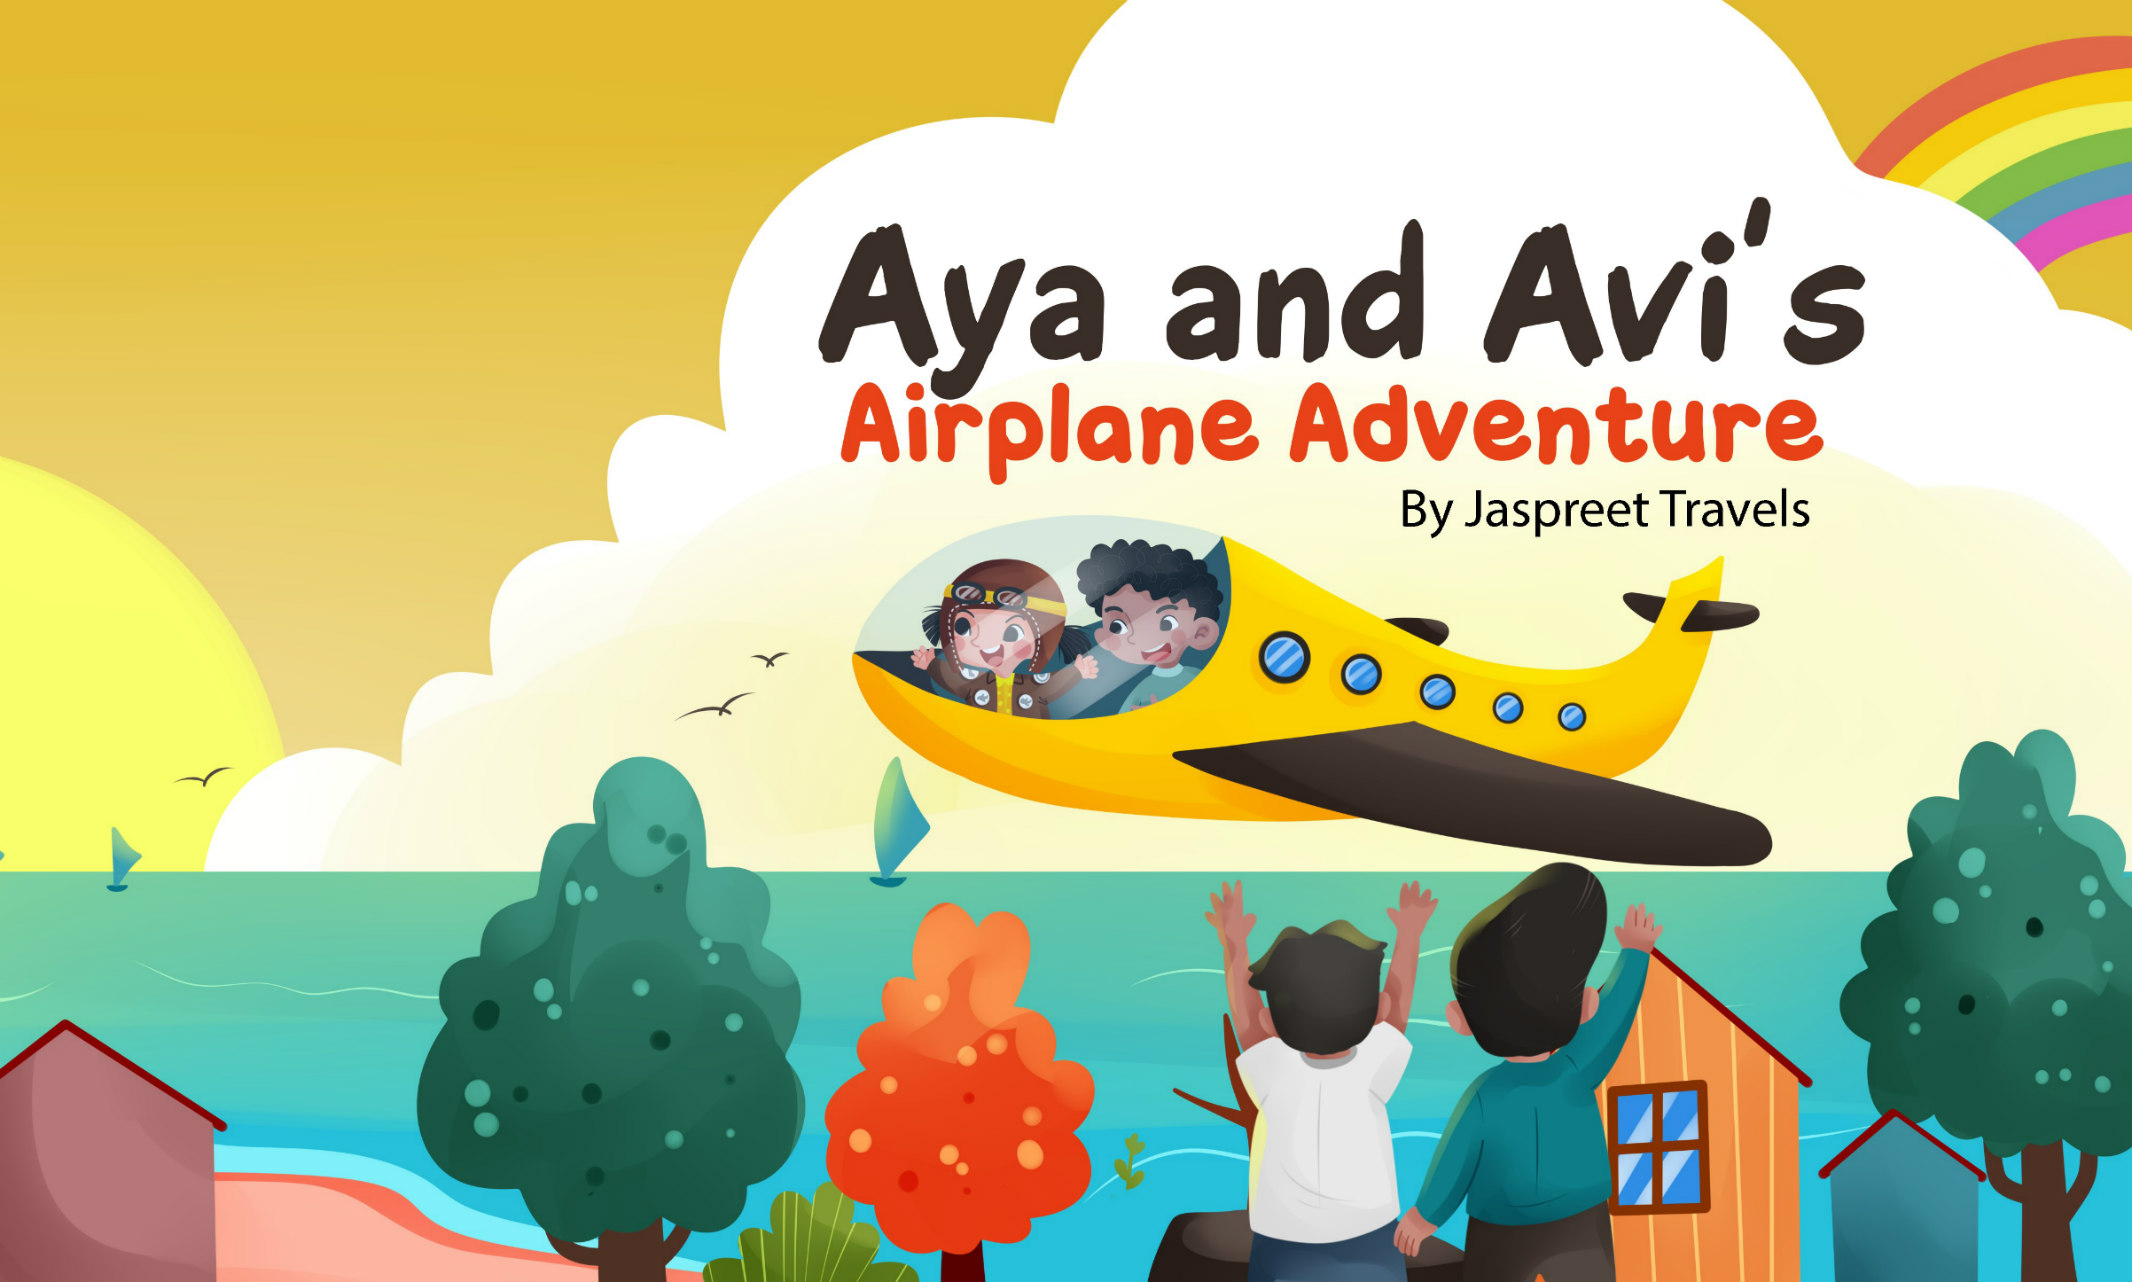 Cover art is of Jaspreet Singh's book Aya and Avi's Airplane Adventure